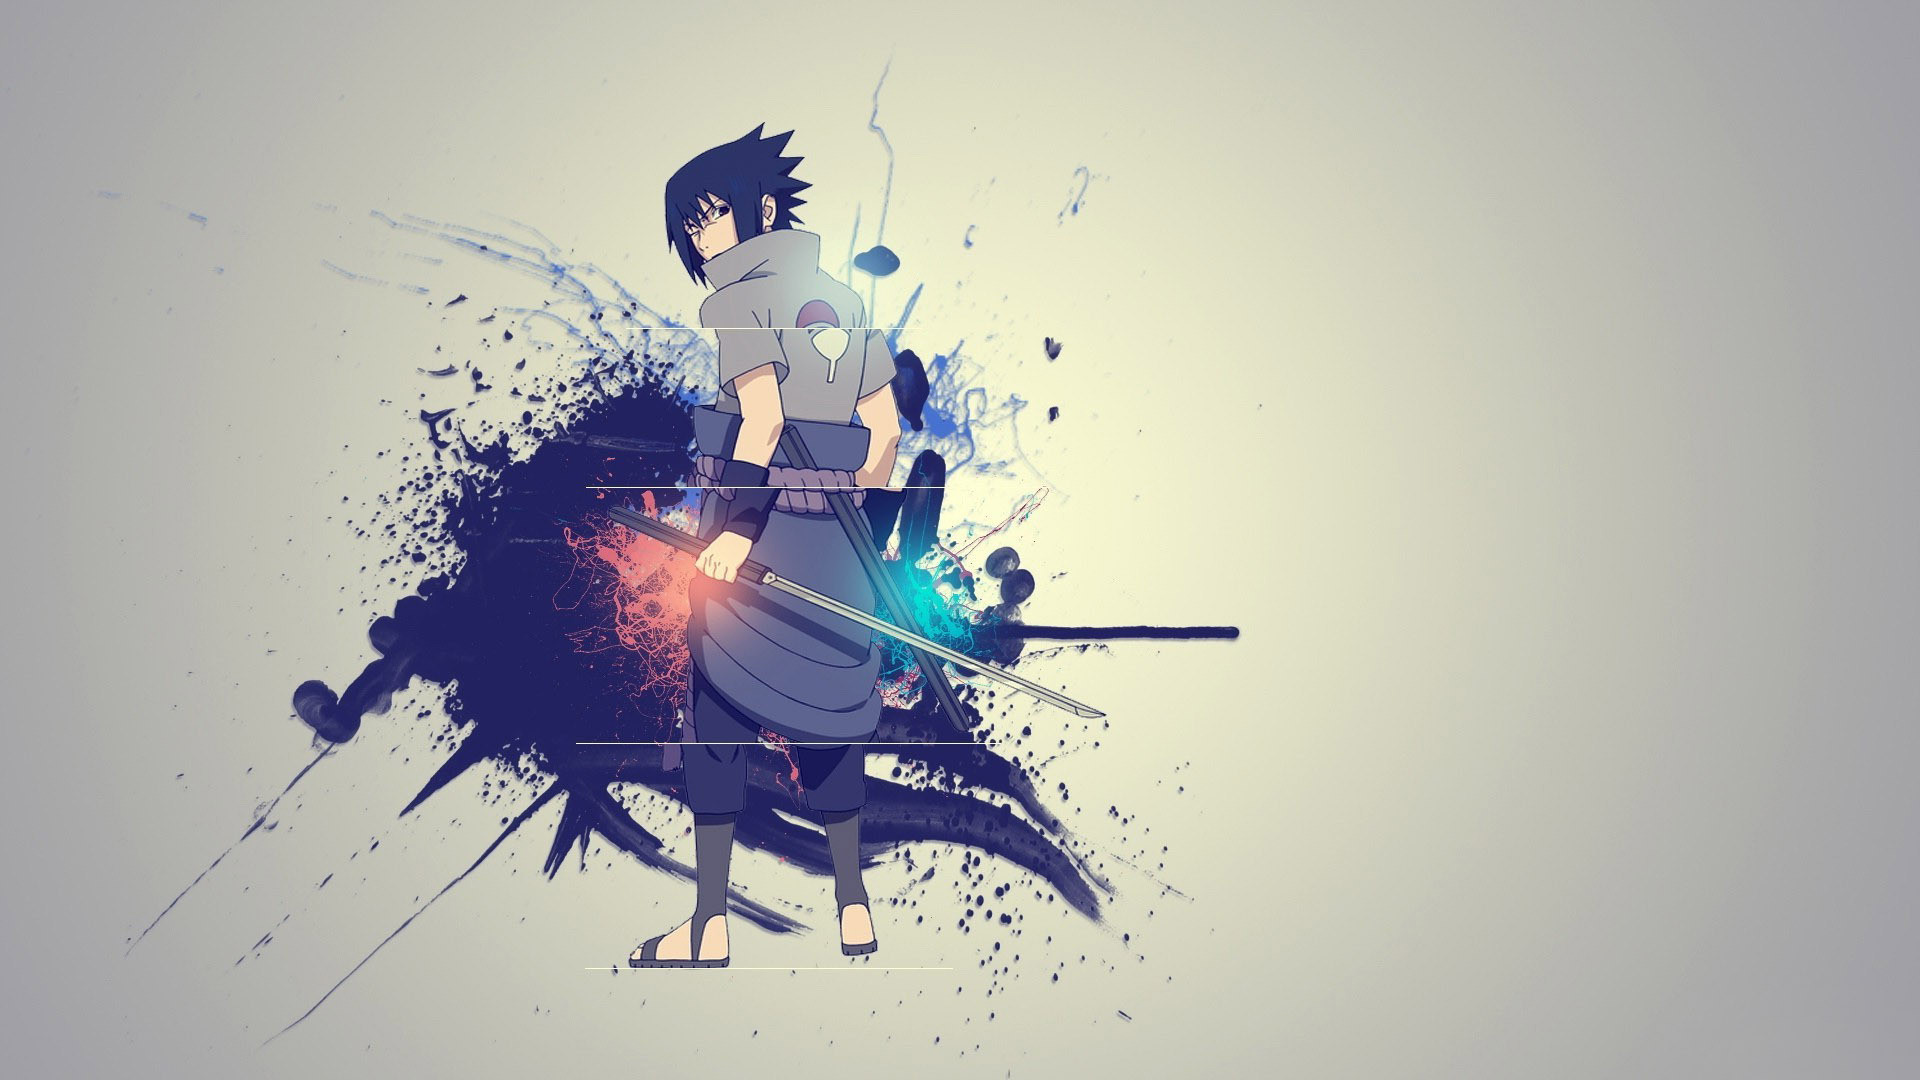 1920x1080 A43 Naruto anime Sasuke Uchiha HD Desktop background wallpapers downloads